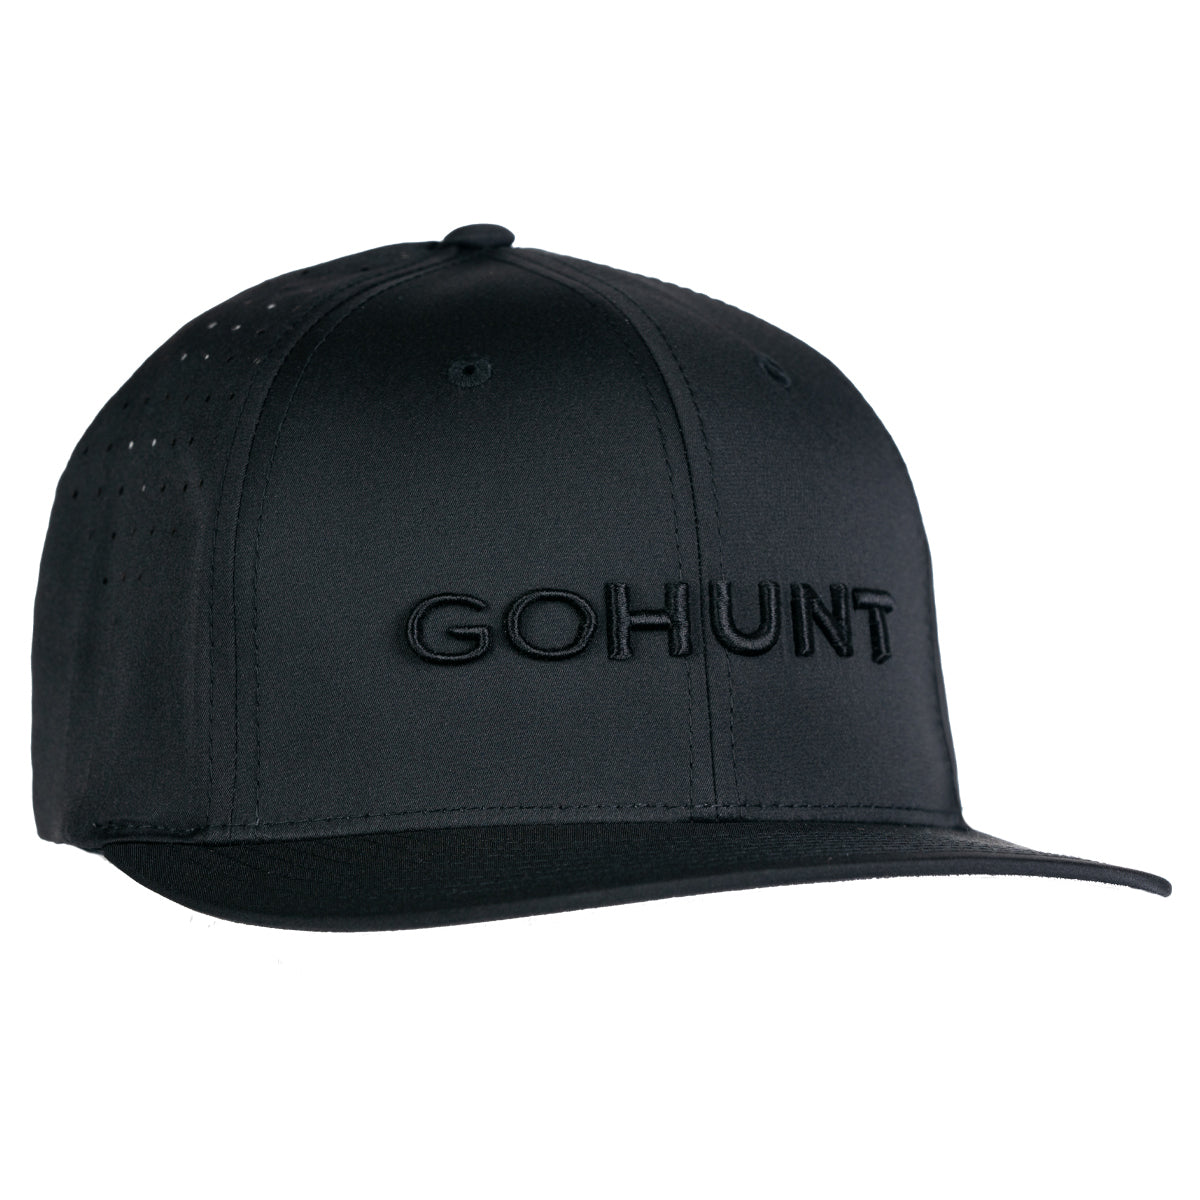 GOHUNT Burrow Hat in Black by GOHUNT | GOHUNT - GOHUNT Shop